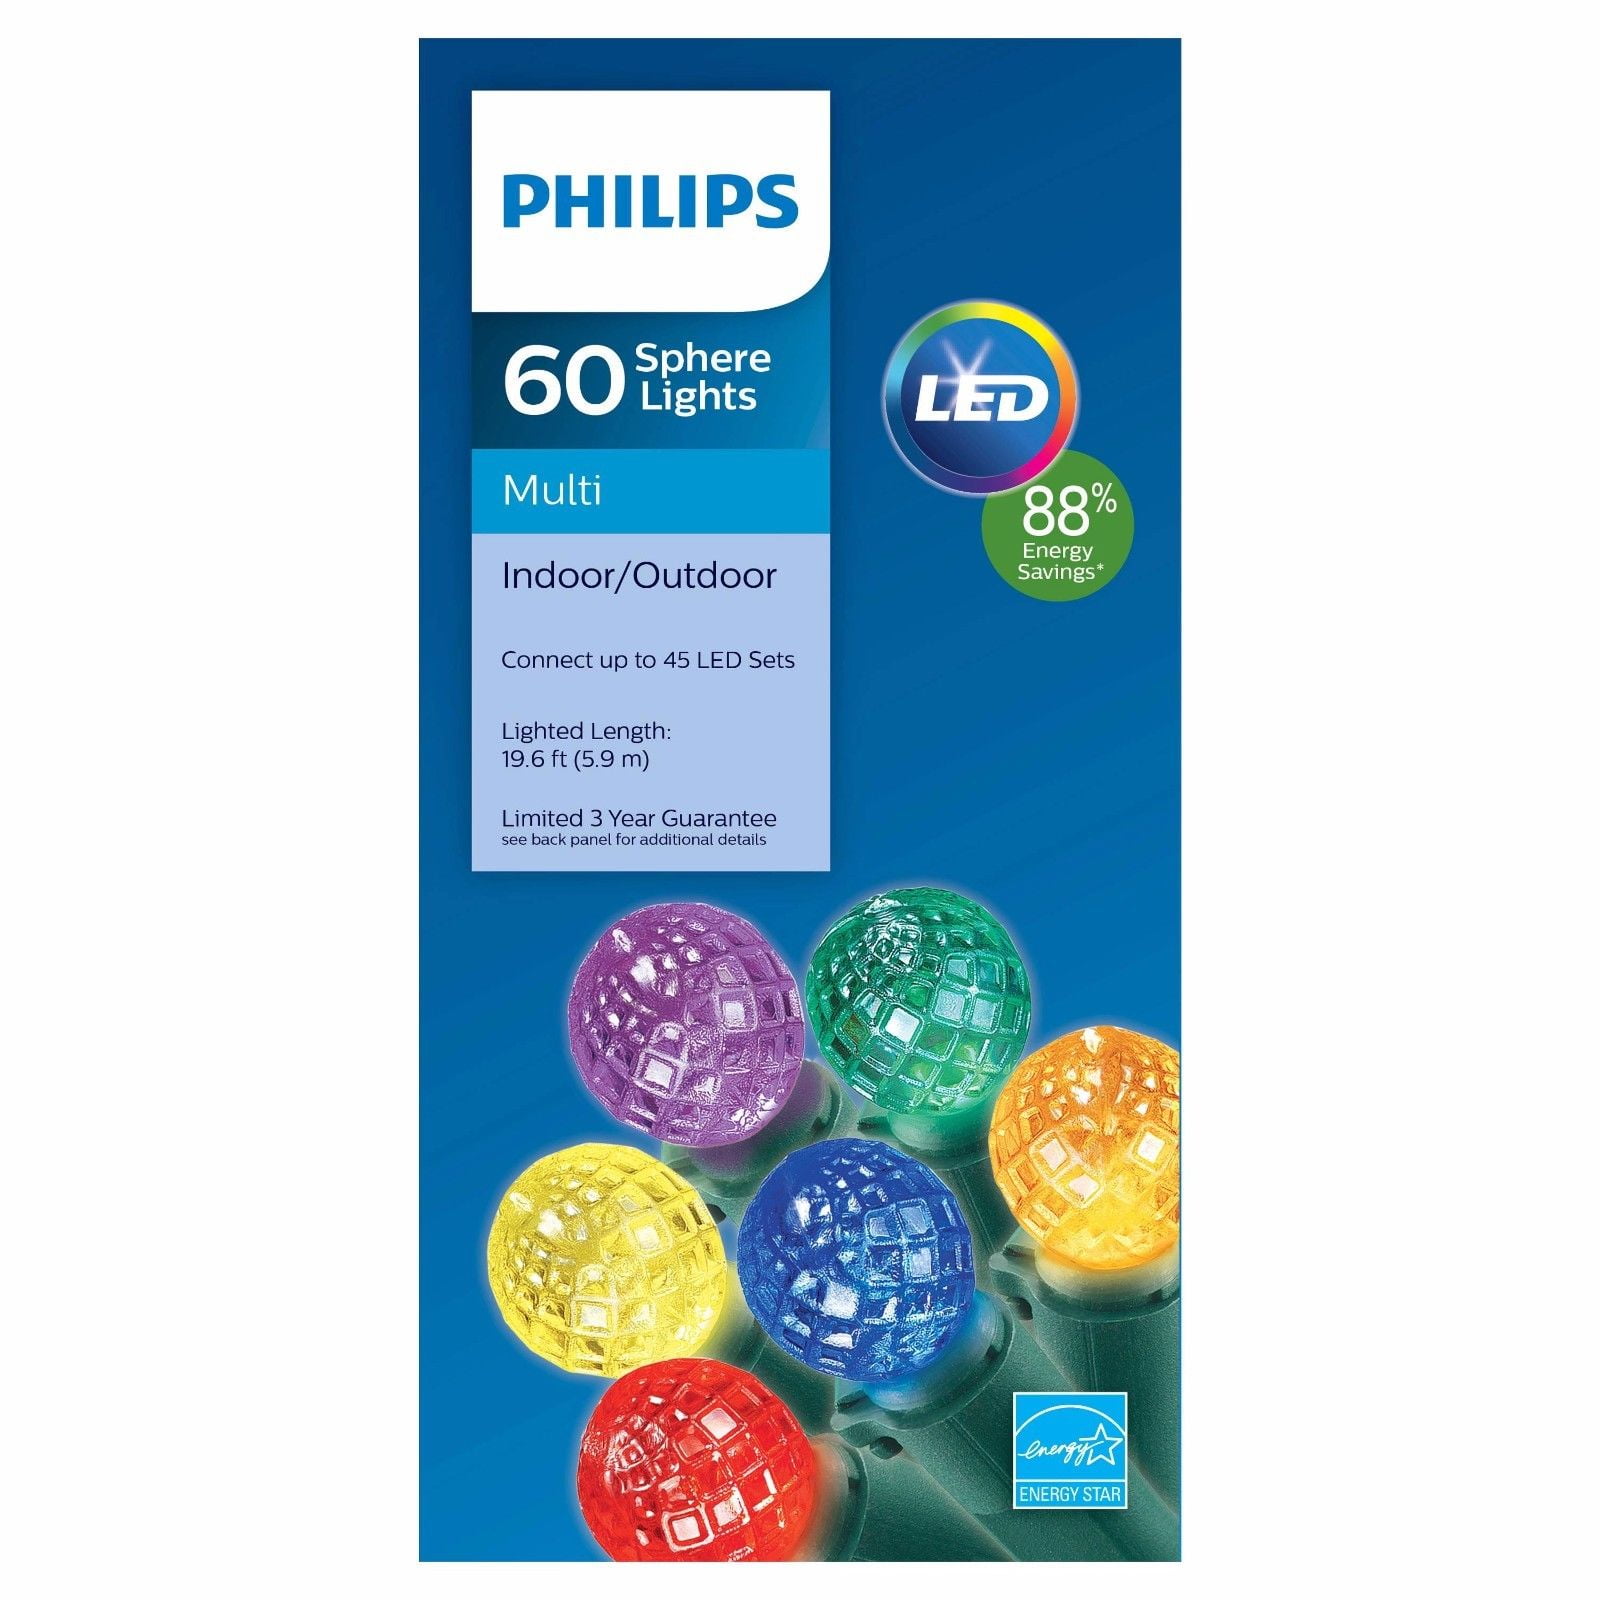 Afspraak Keizer De layout Philips 60ct Multicolored LED Faceted Sphere String indoor/Outdoor Lights -  Walmart.com